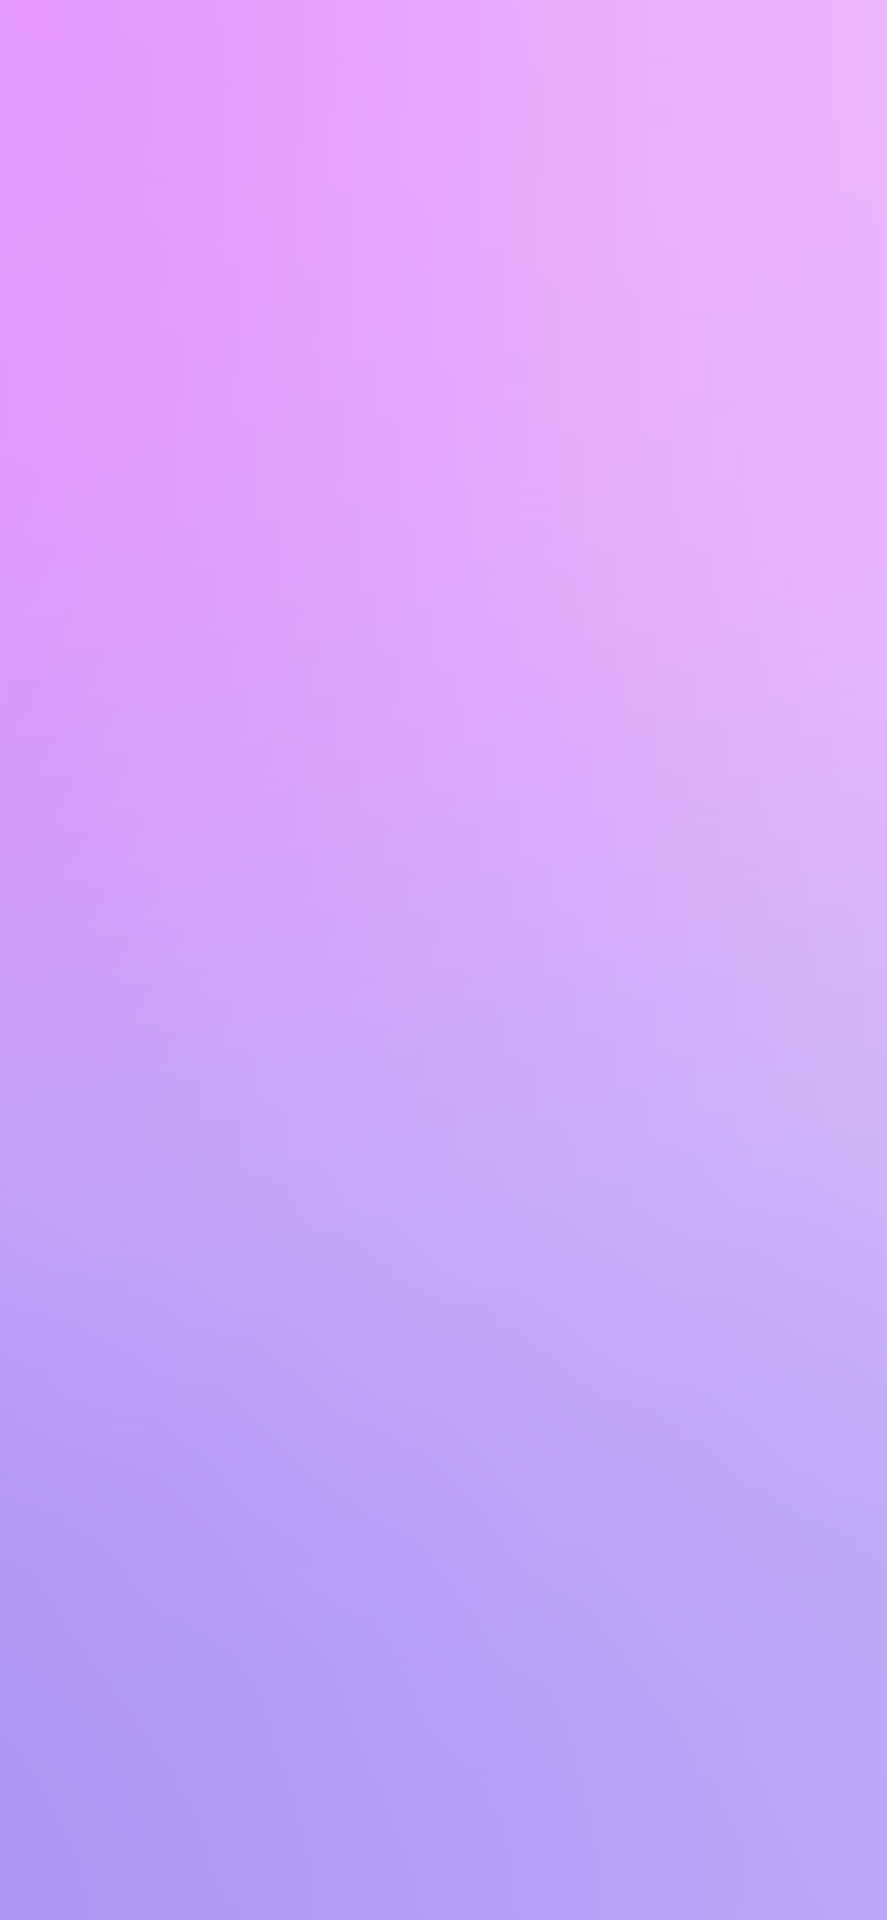 En Vacker Nyans Av Lavendel. Wallpaper